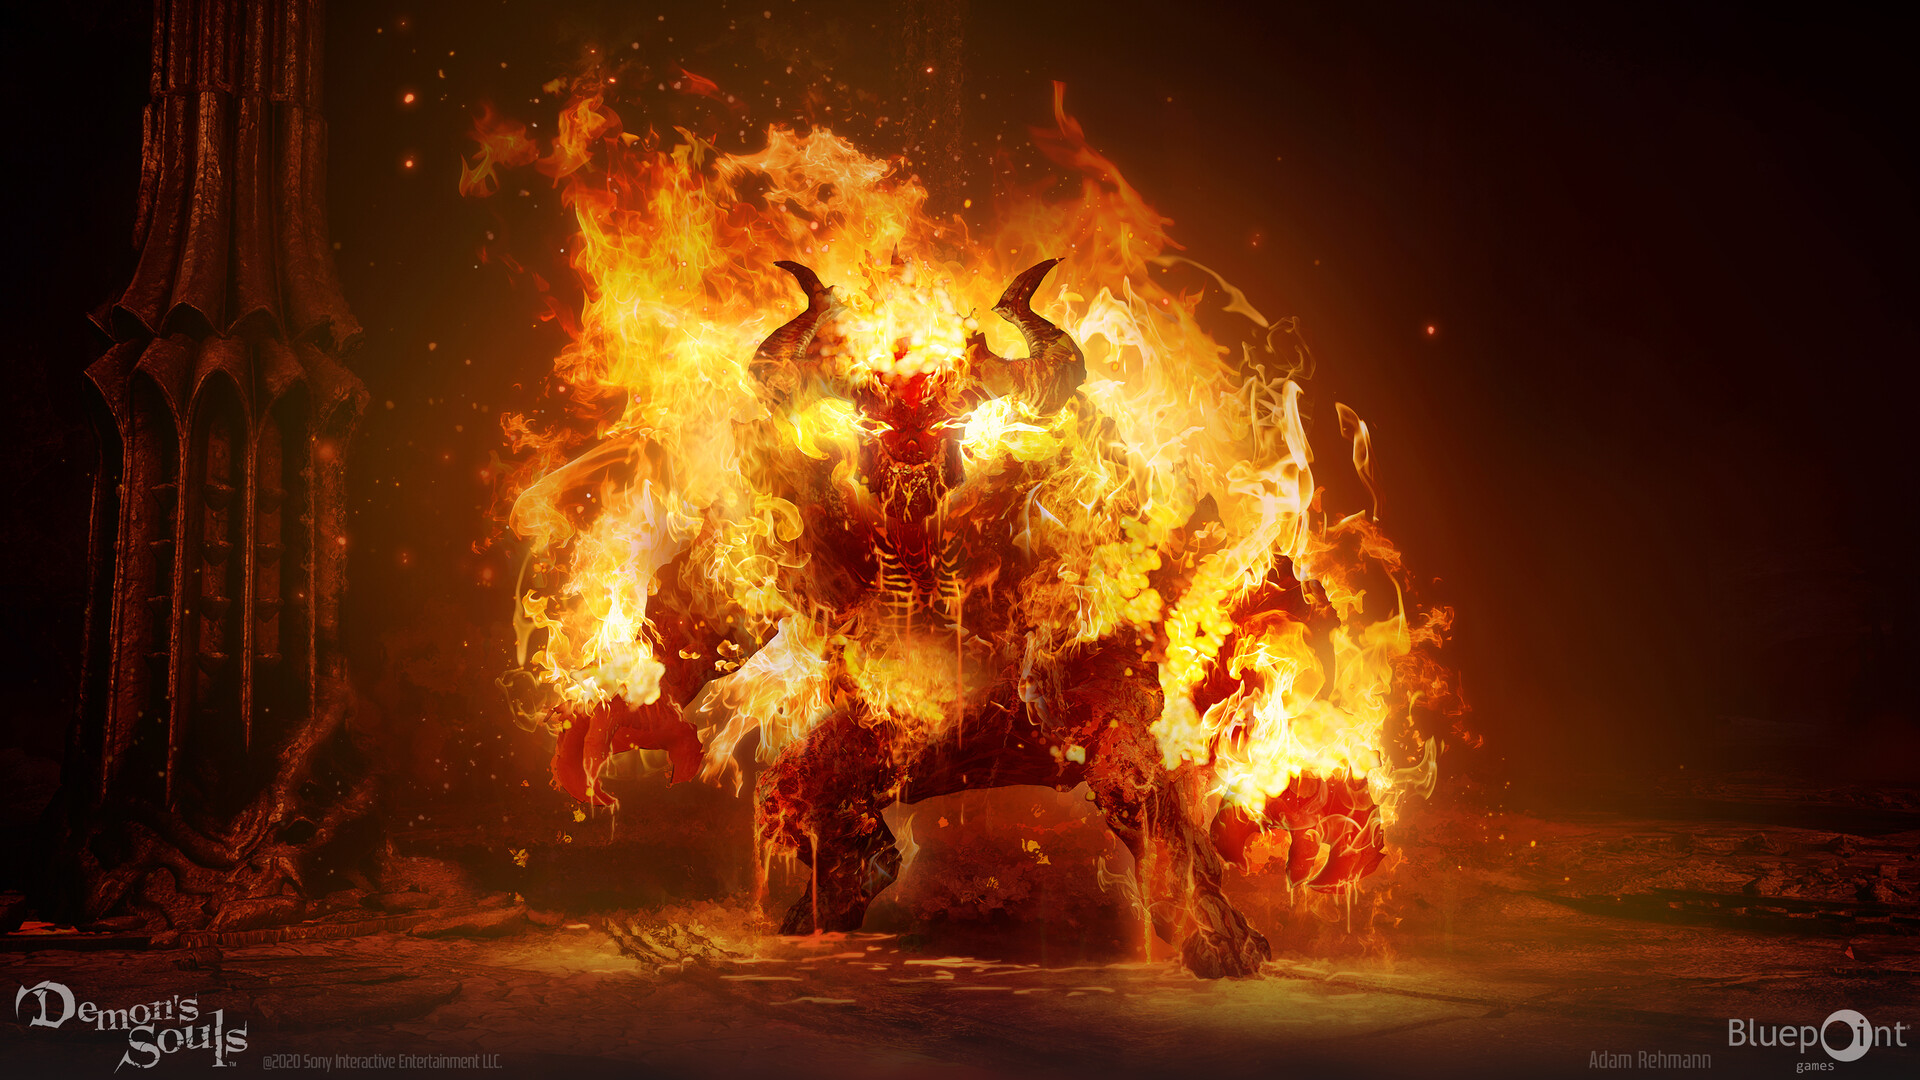 Flamelurker - Demon's Souls.com